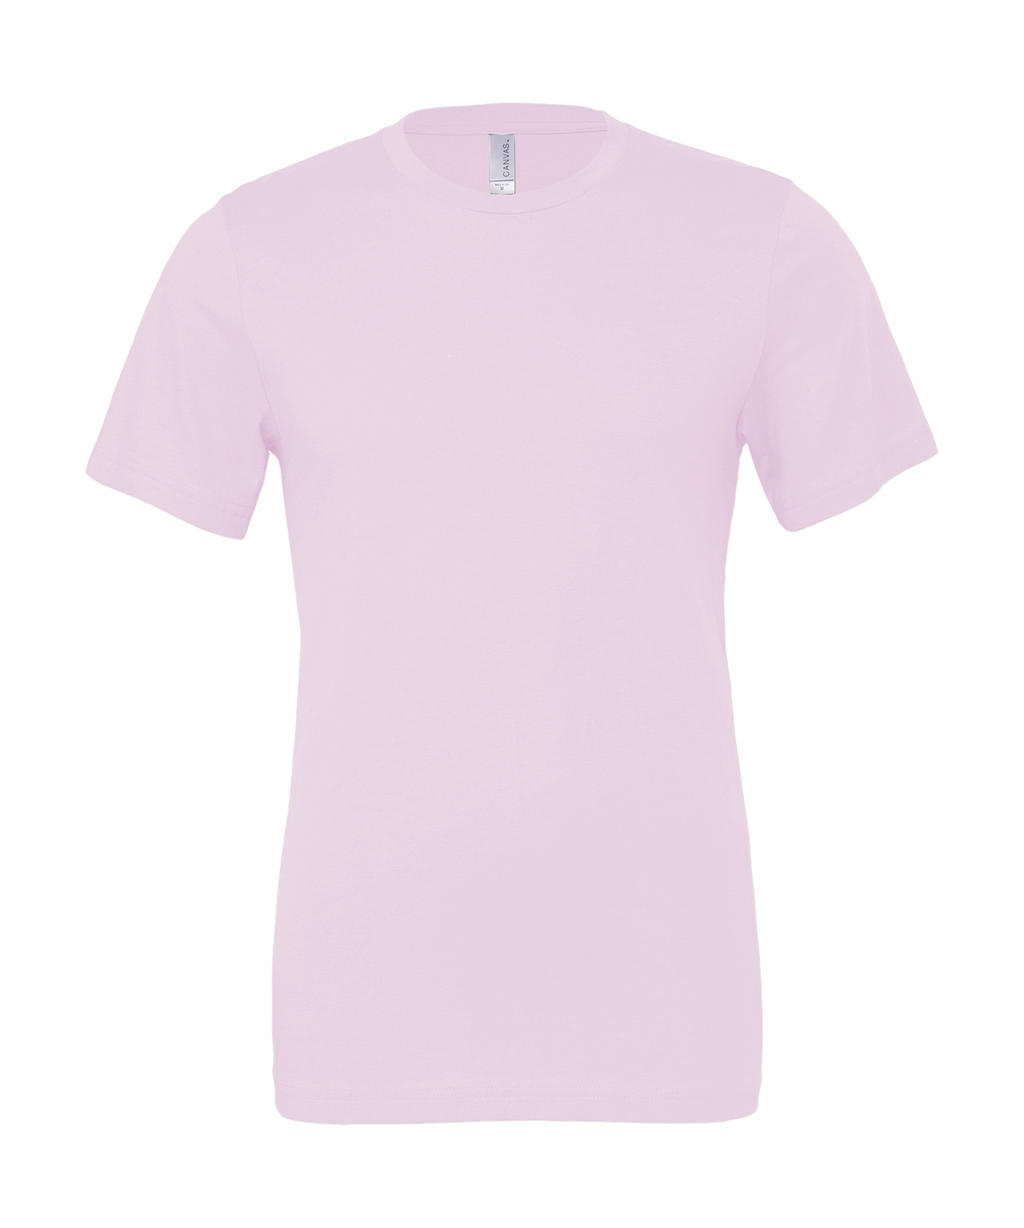 Tričko Unisex Jersey - soft pink